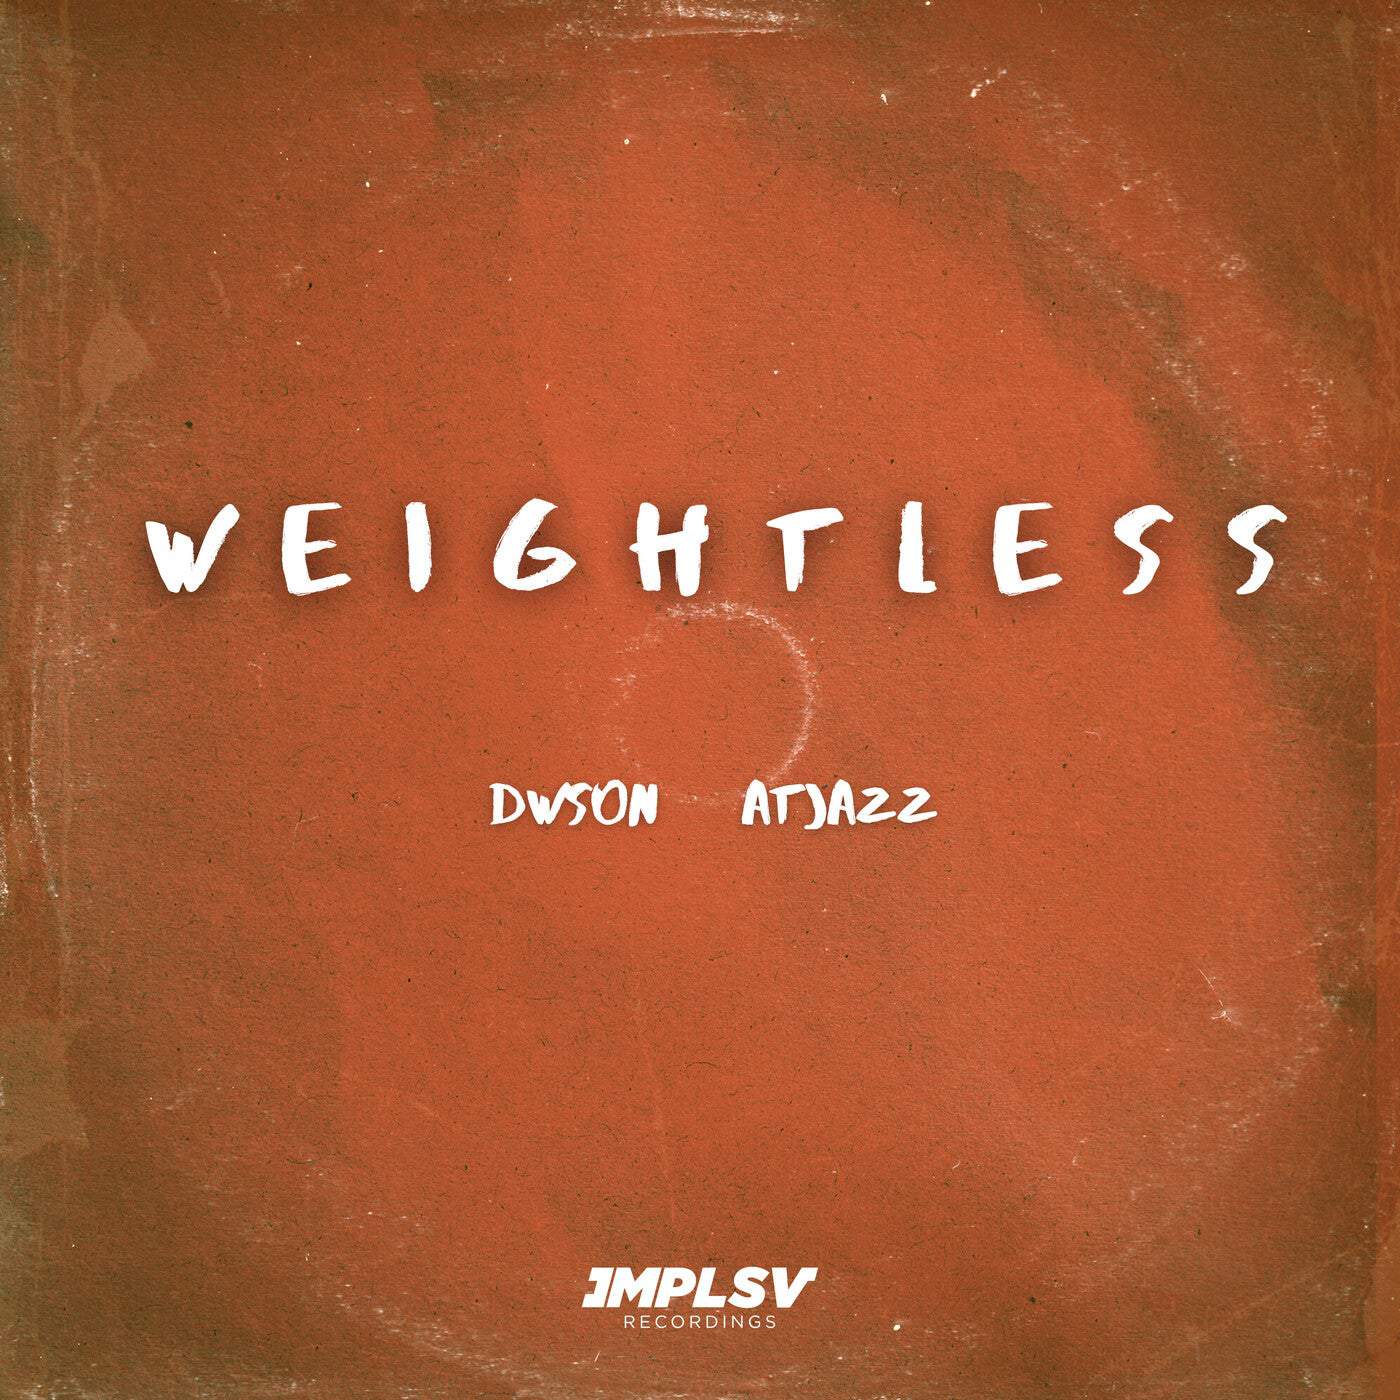 Download Atjazz, Dwson - Weightless on Electrobuzz